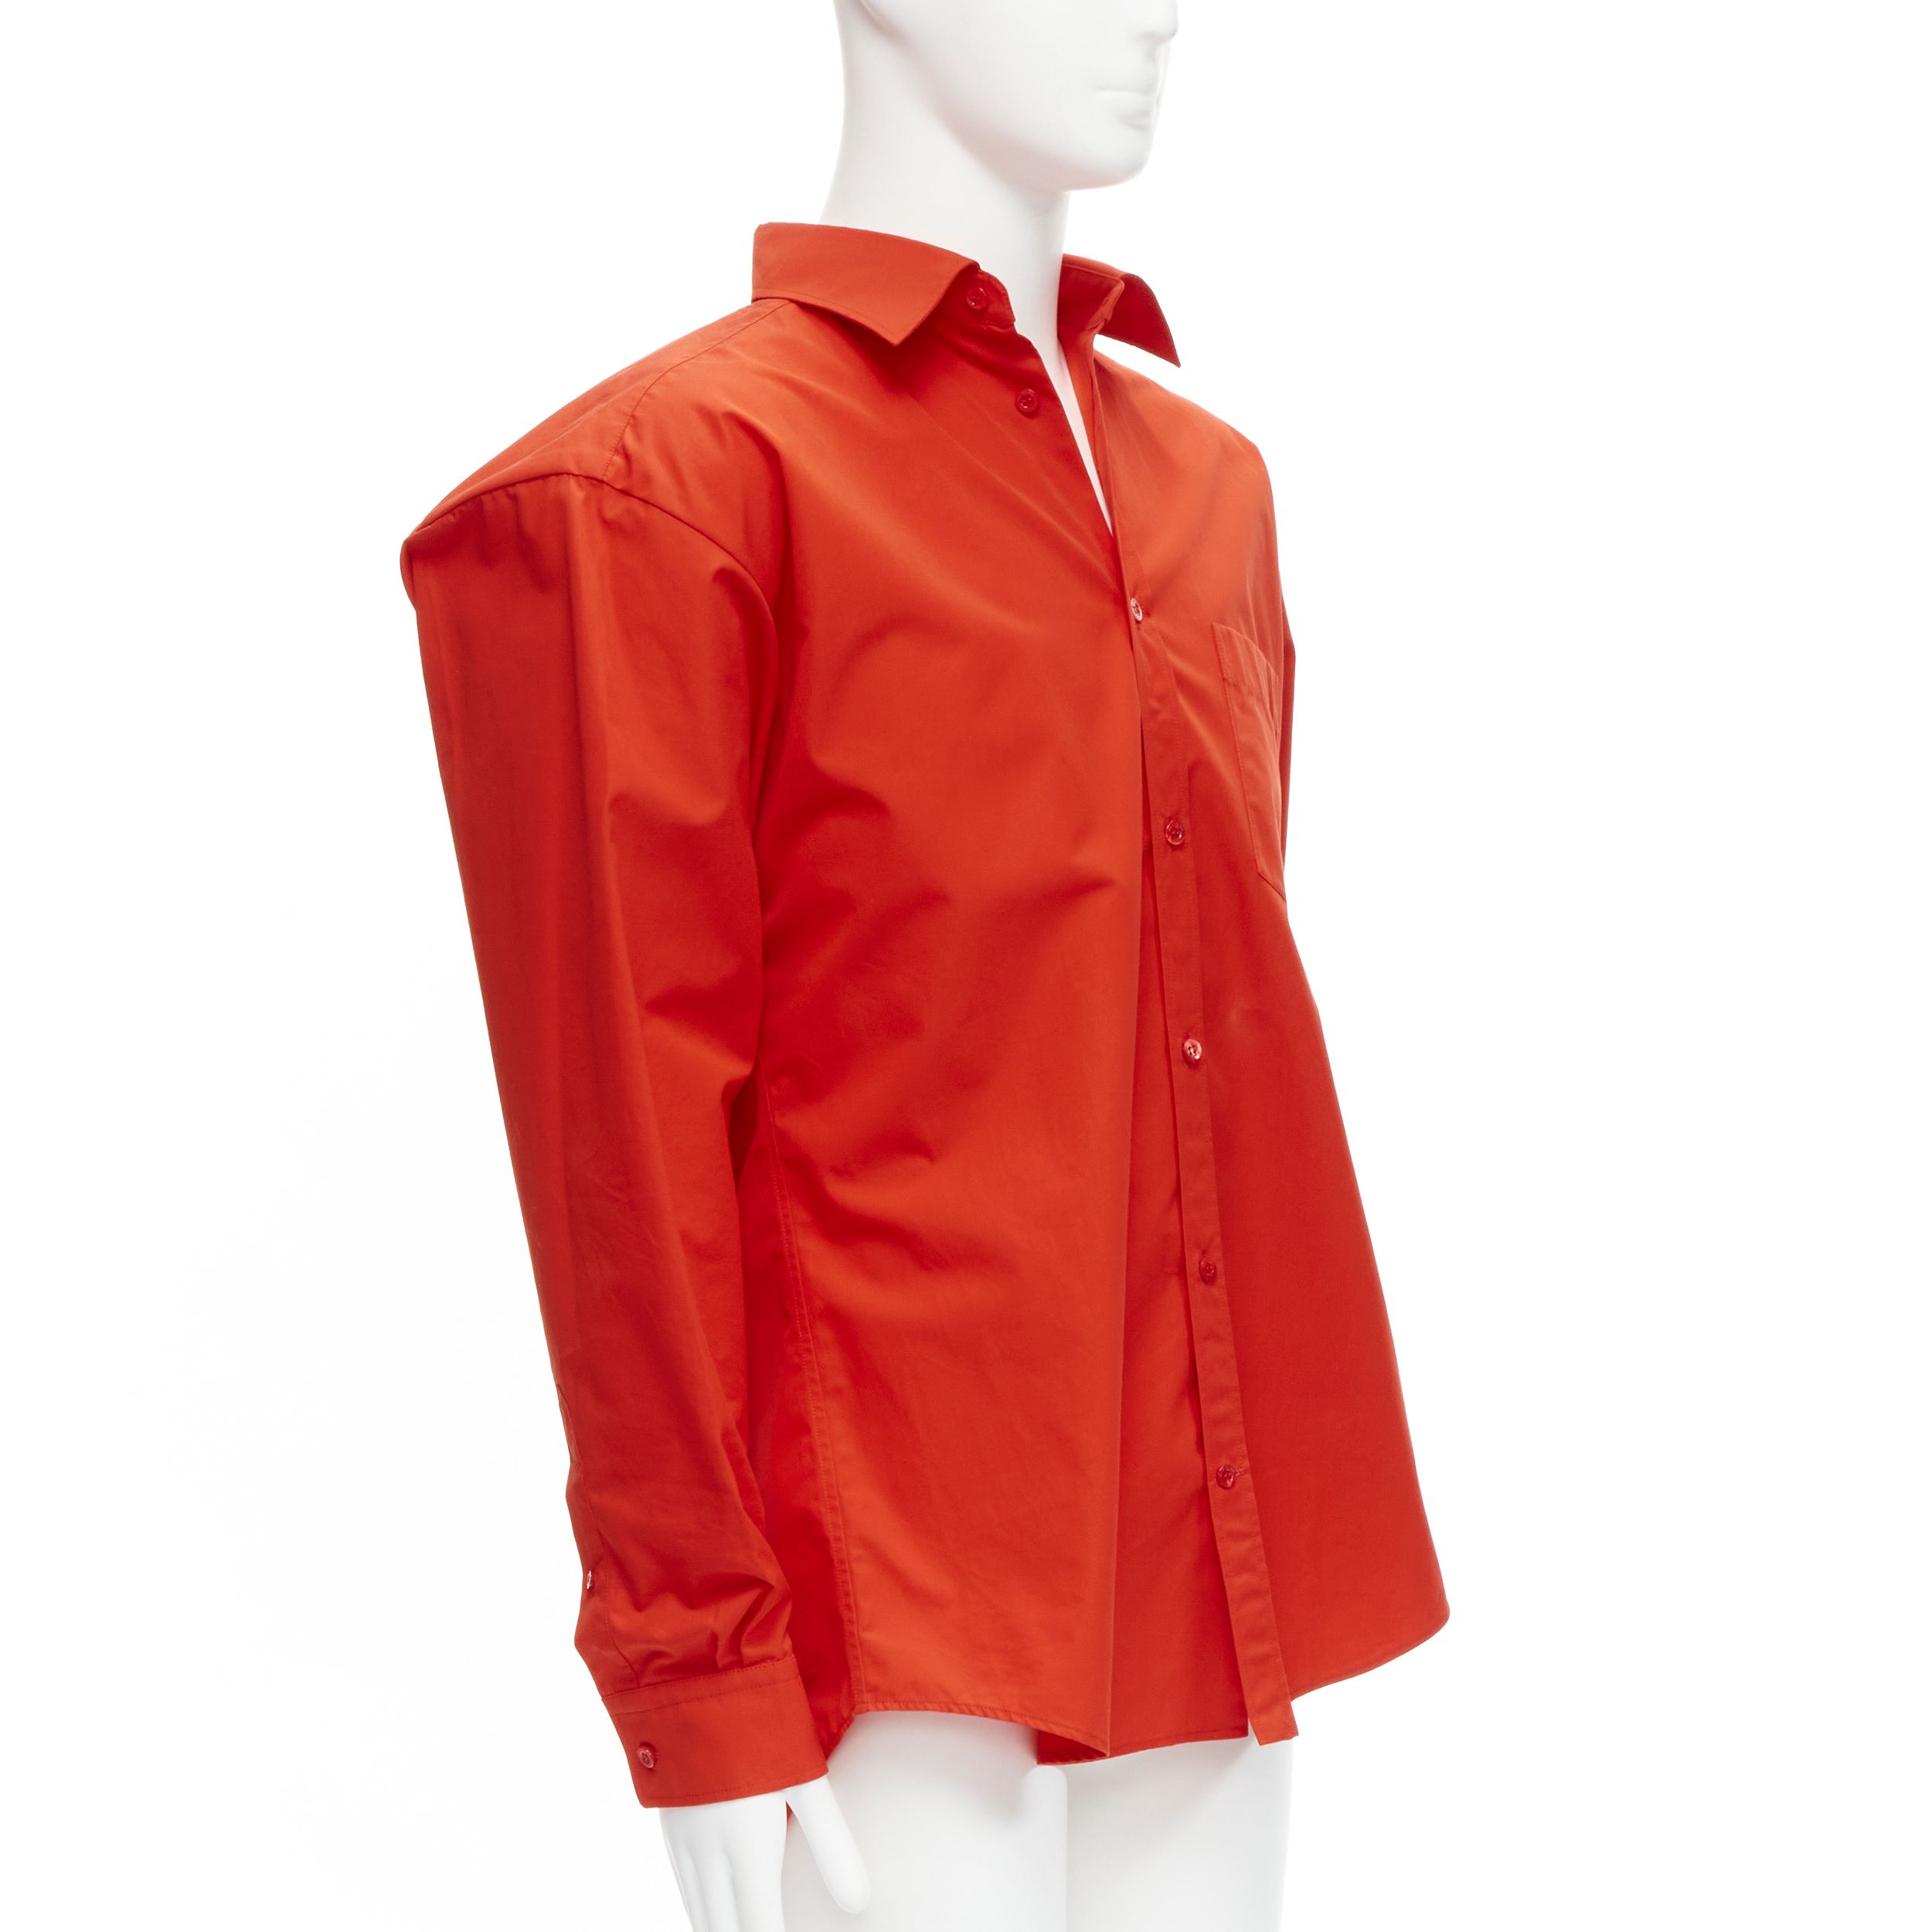 Balenciaga BALENCIAGA Cocoon red swing collar 3D cut oversized button down shirt Size M / US 6-8 / IT 42-44 - 1 Preview